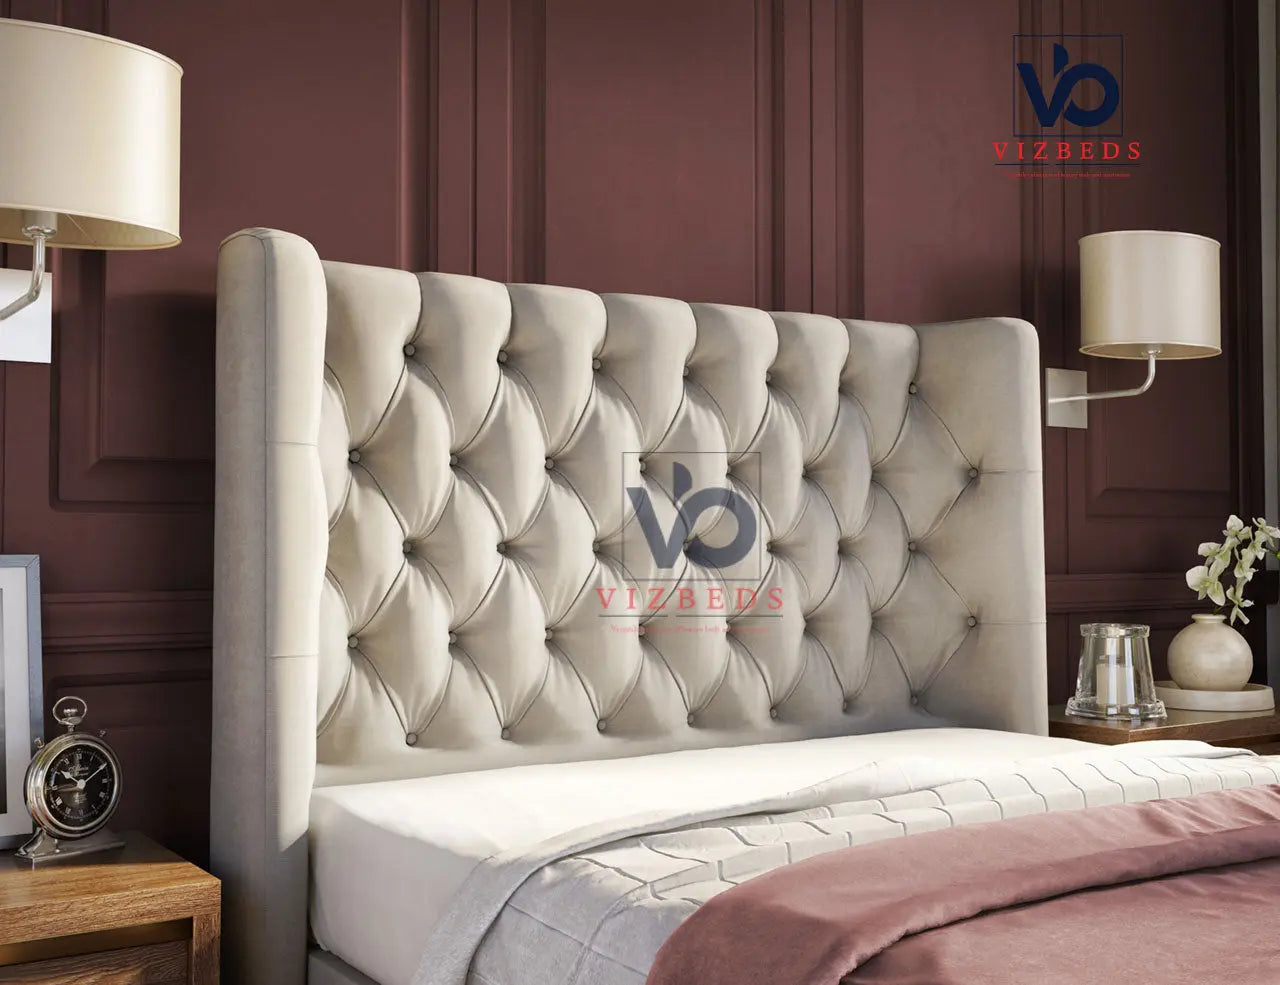 Olender Winged Storage Ottoman Divan Bed With Luxury Headboard